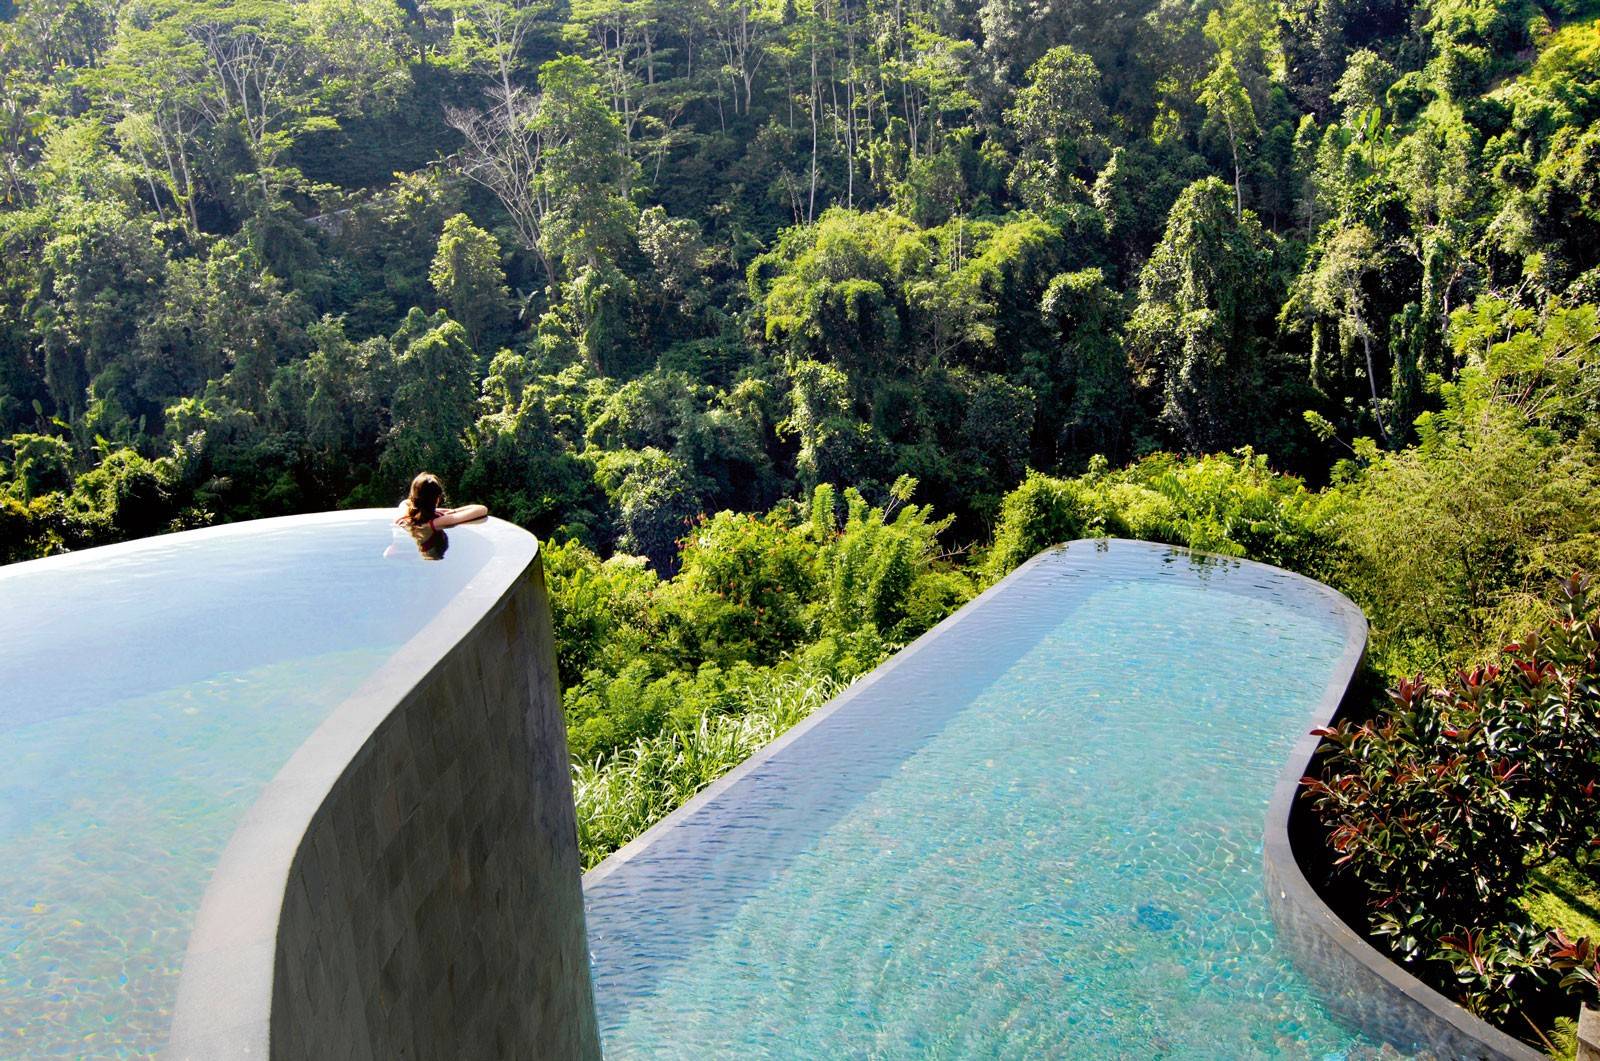 The most beautiful hotel in bali – hanging gardens ubud